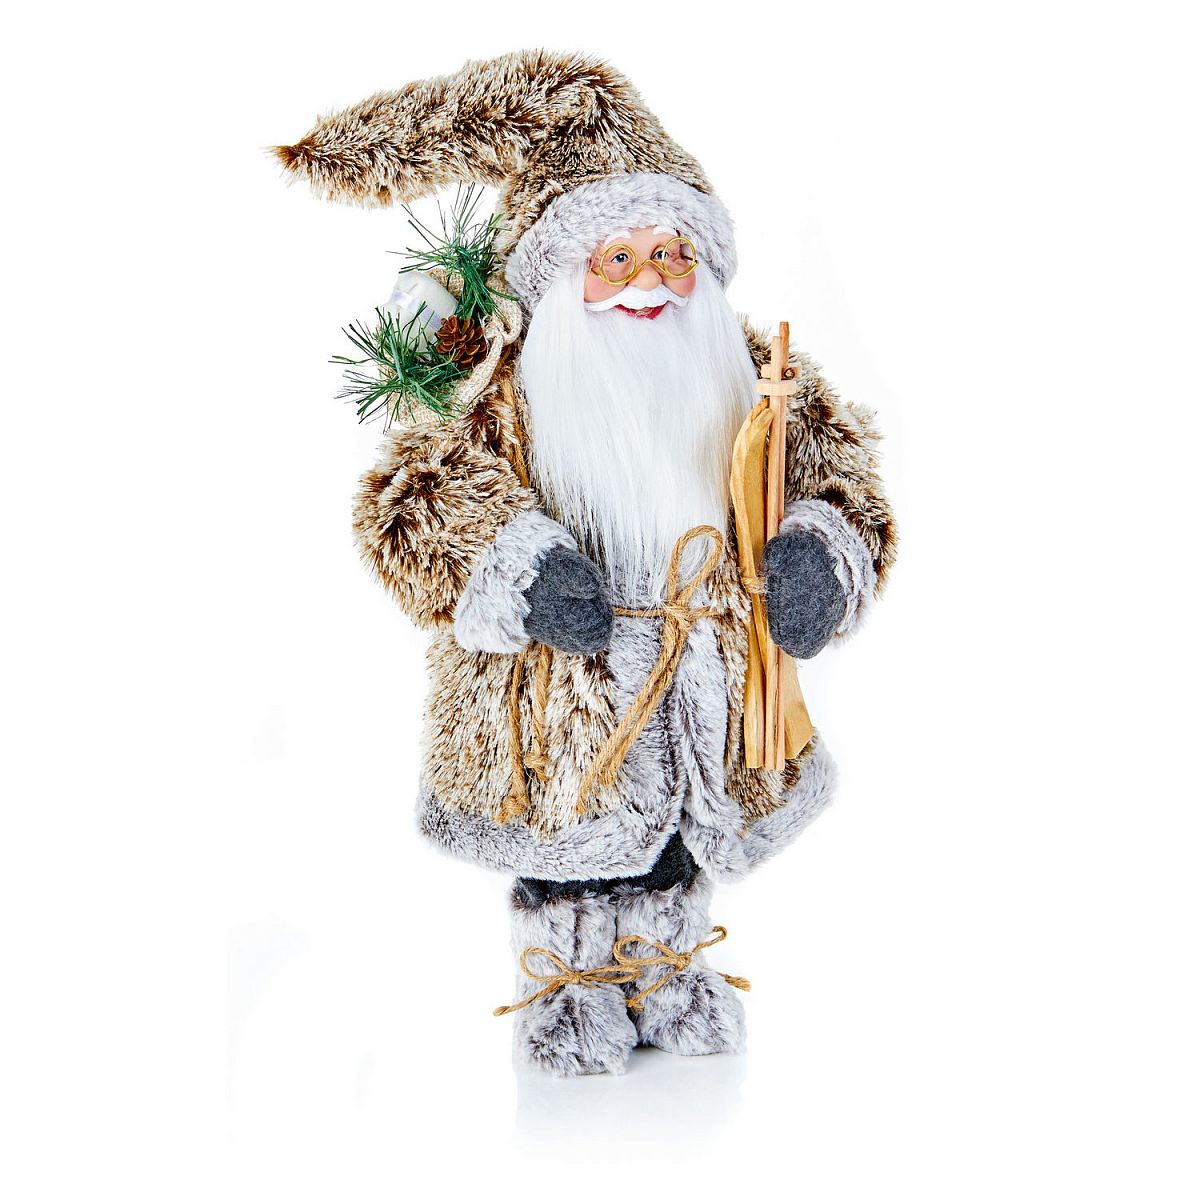 Christmas Alpine Santa Figurine with Glasses